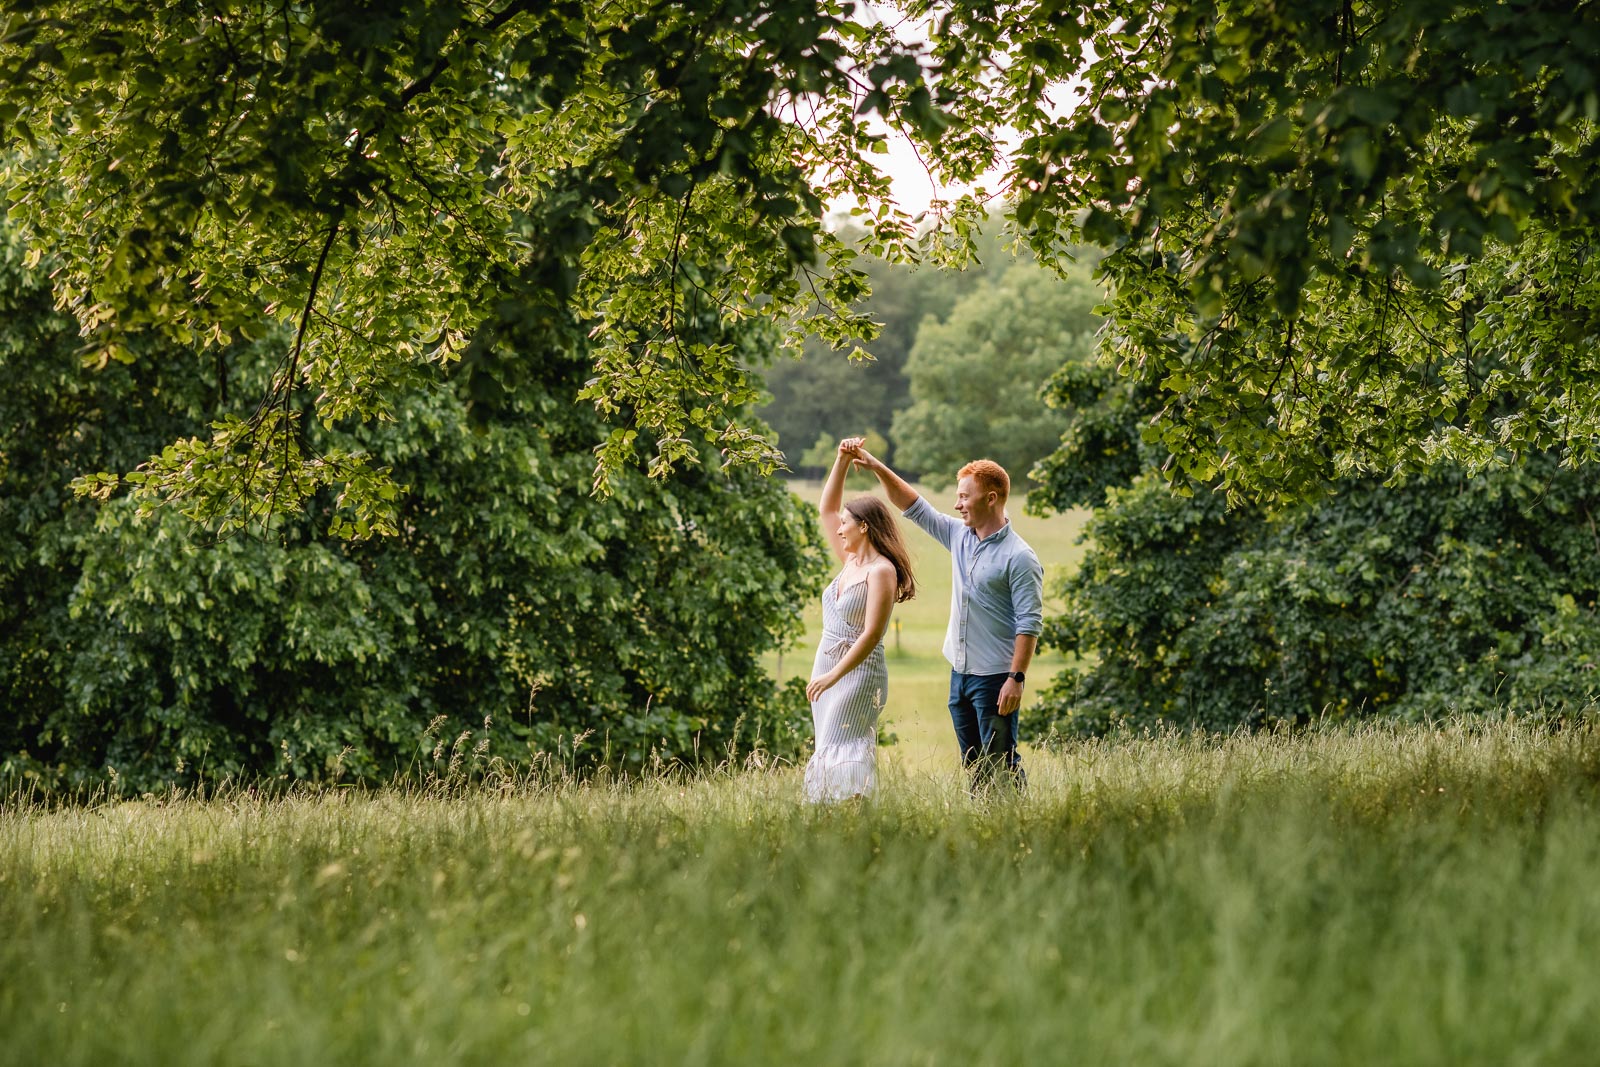 Burghley House pre-wedding shoot – Victoria & David